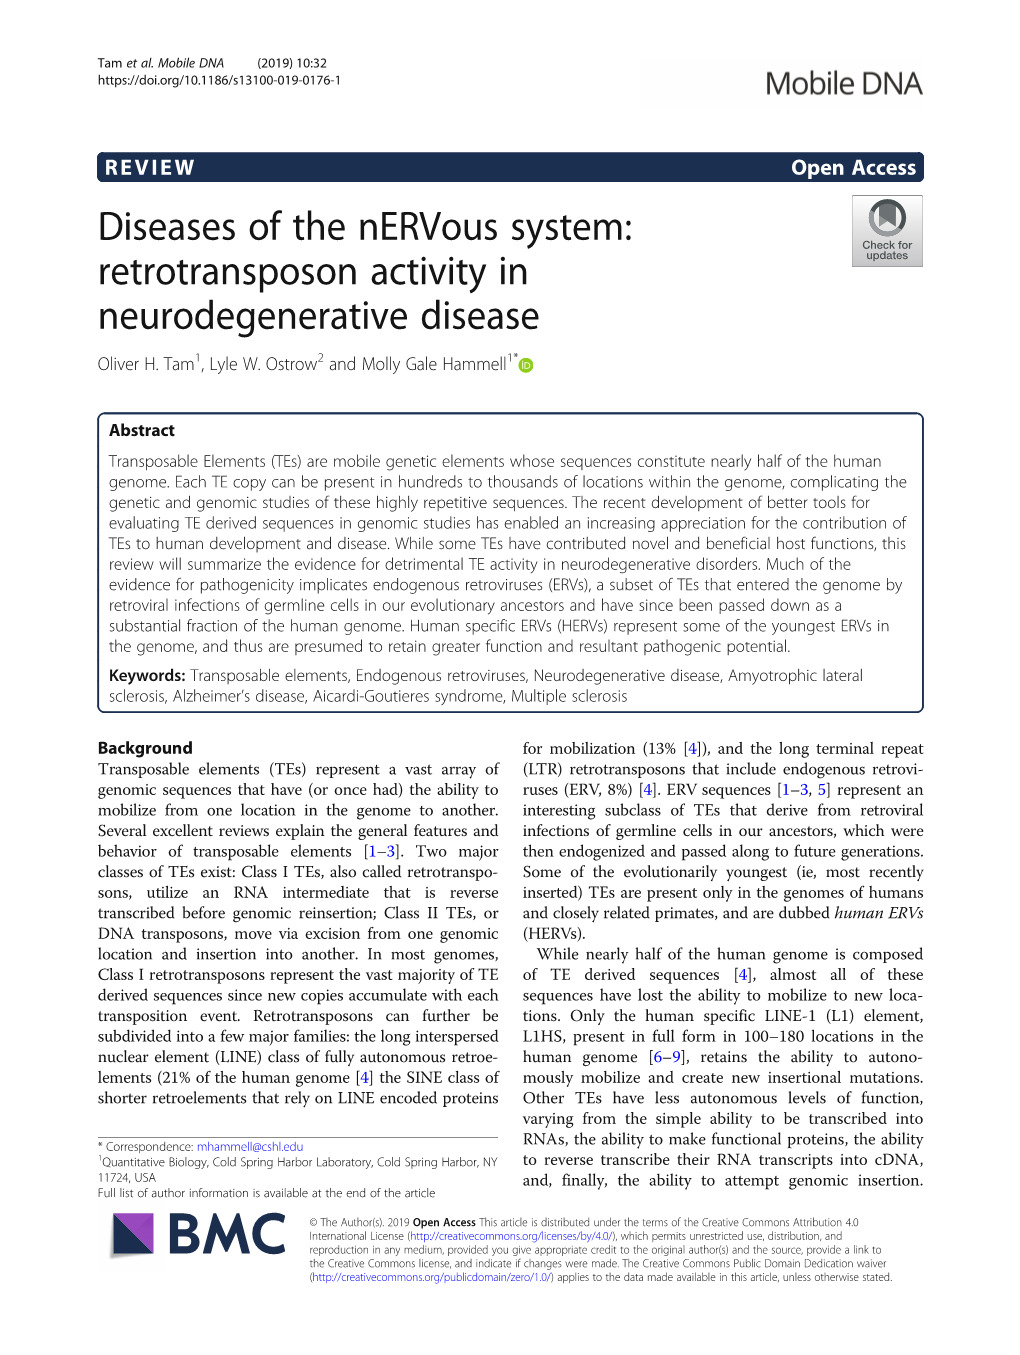 Retrotransposon Activity in Neurodegenerative Disease Oliver H